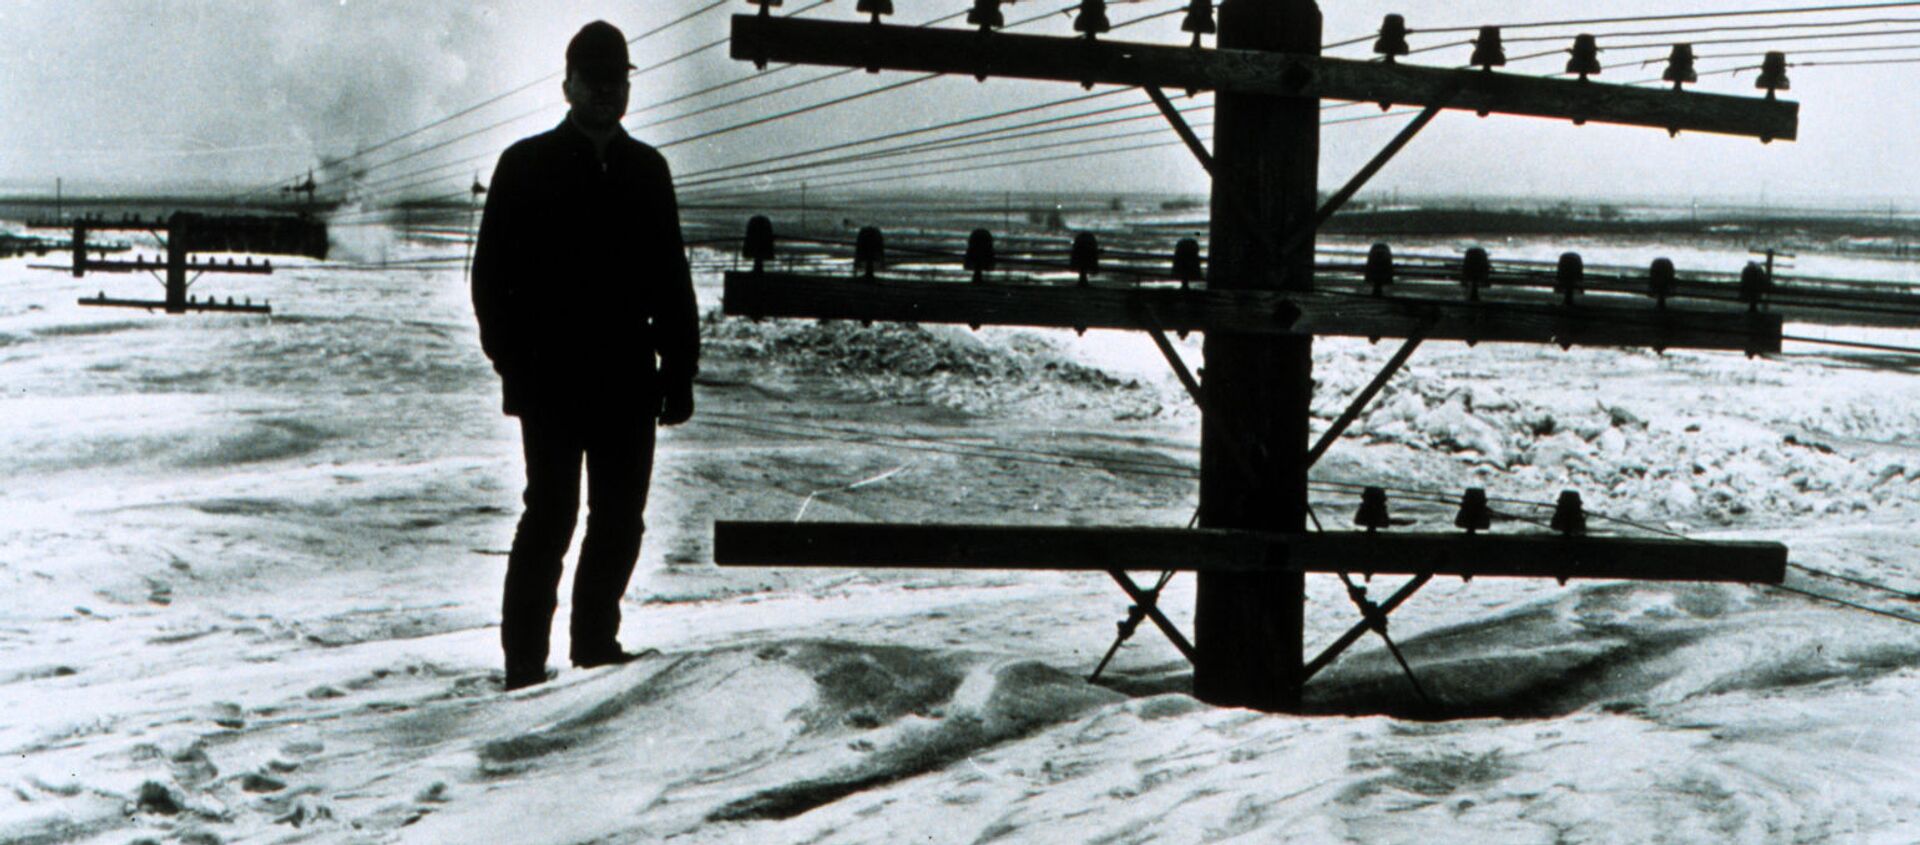 Мужчина на снегу после сильнейше метели в Северной Дакоте, 1966 год - Sputnik Молдова, 1920, 17.02.2021